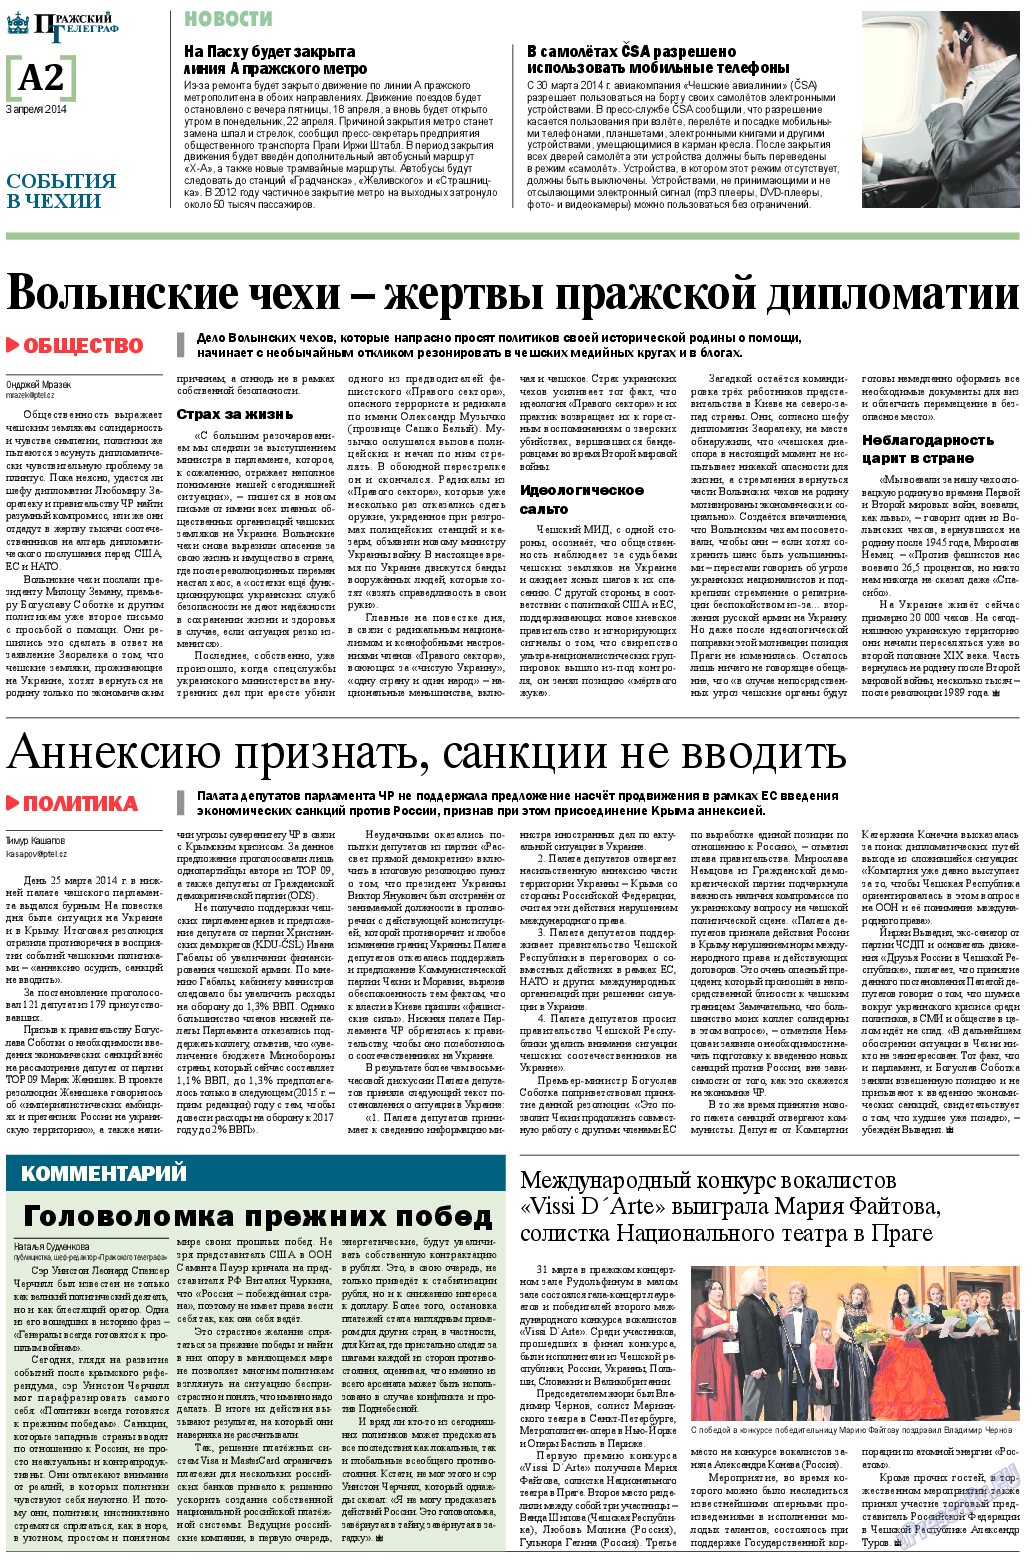 Пражский телеграф, газета. 2014 №14 стр.2